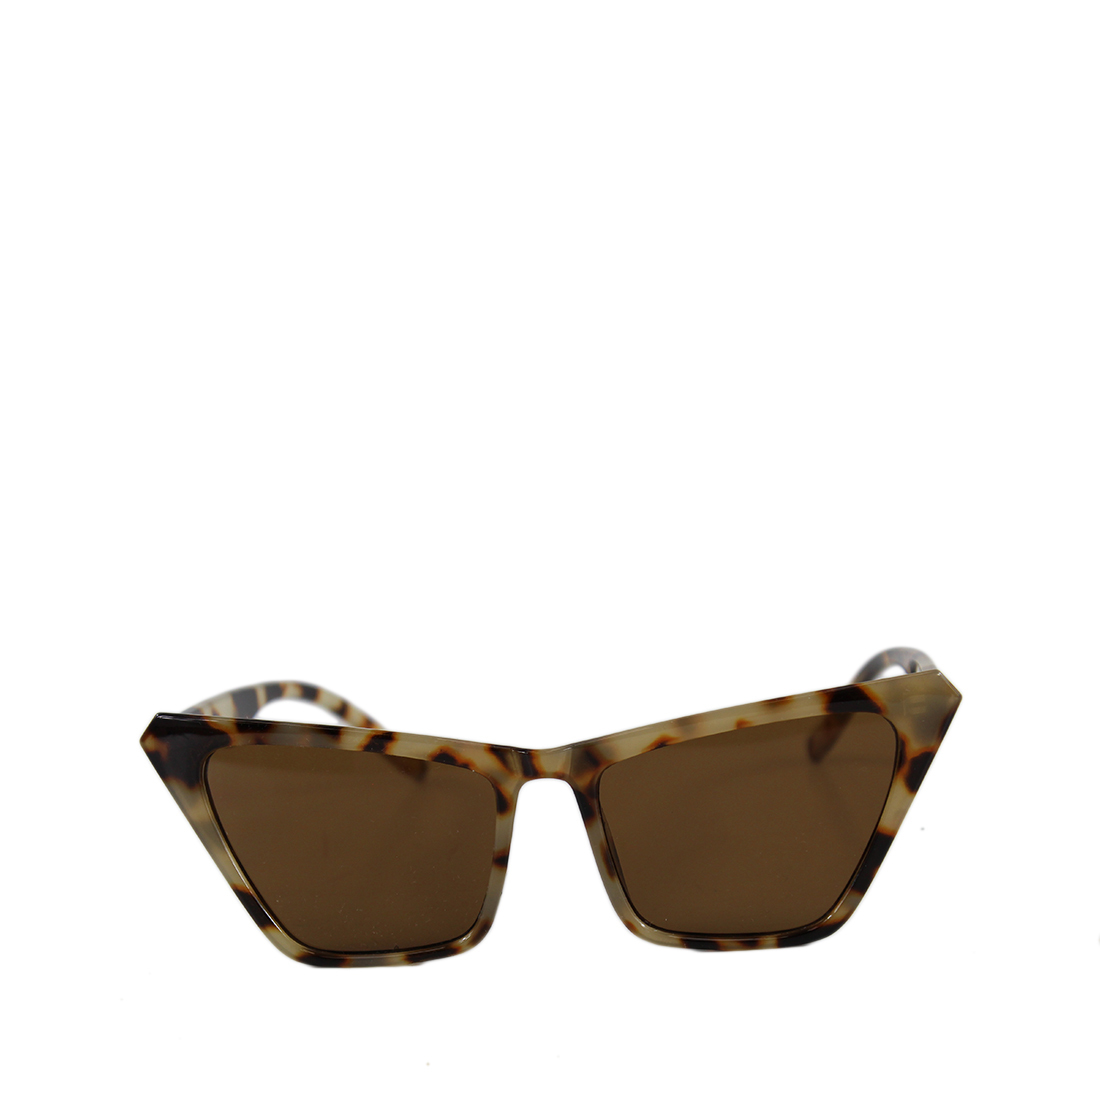 * Beveled cat eye sunglasses in shiny colour